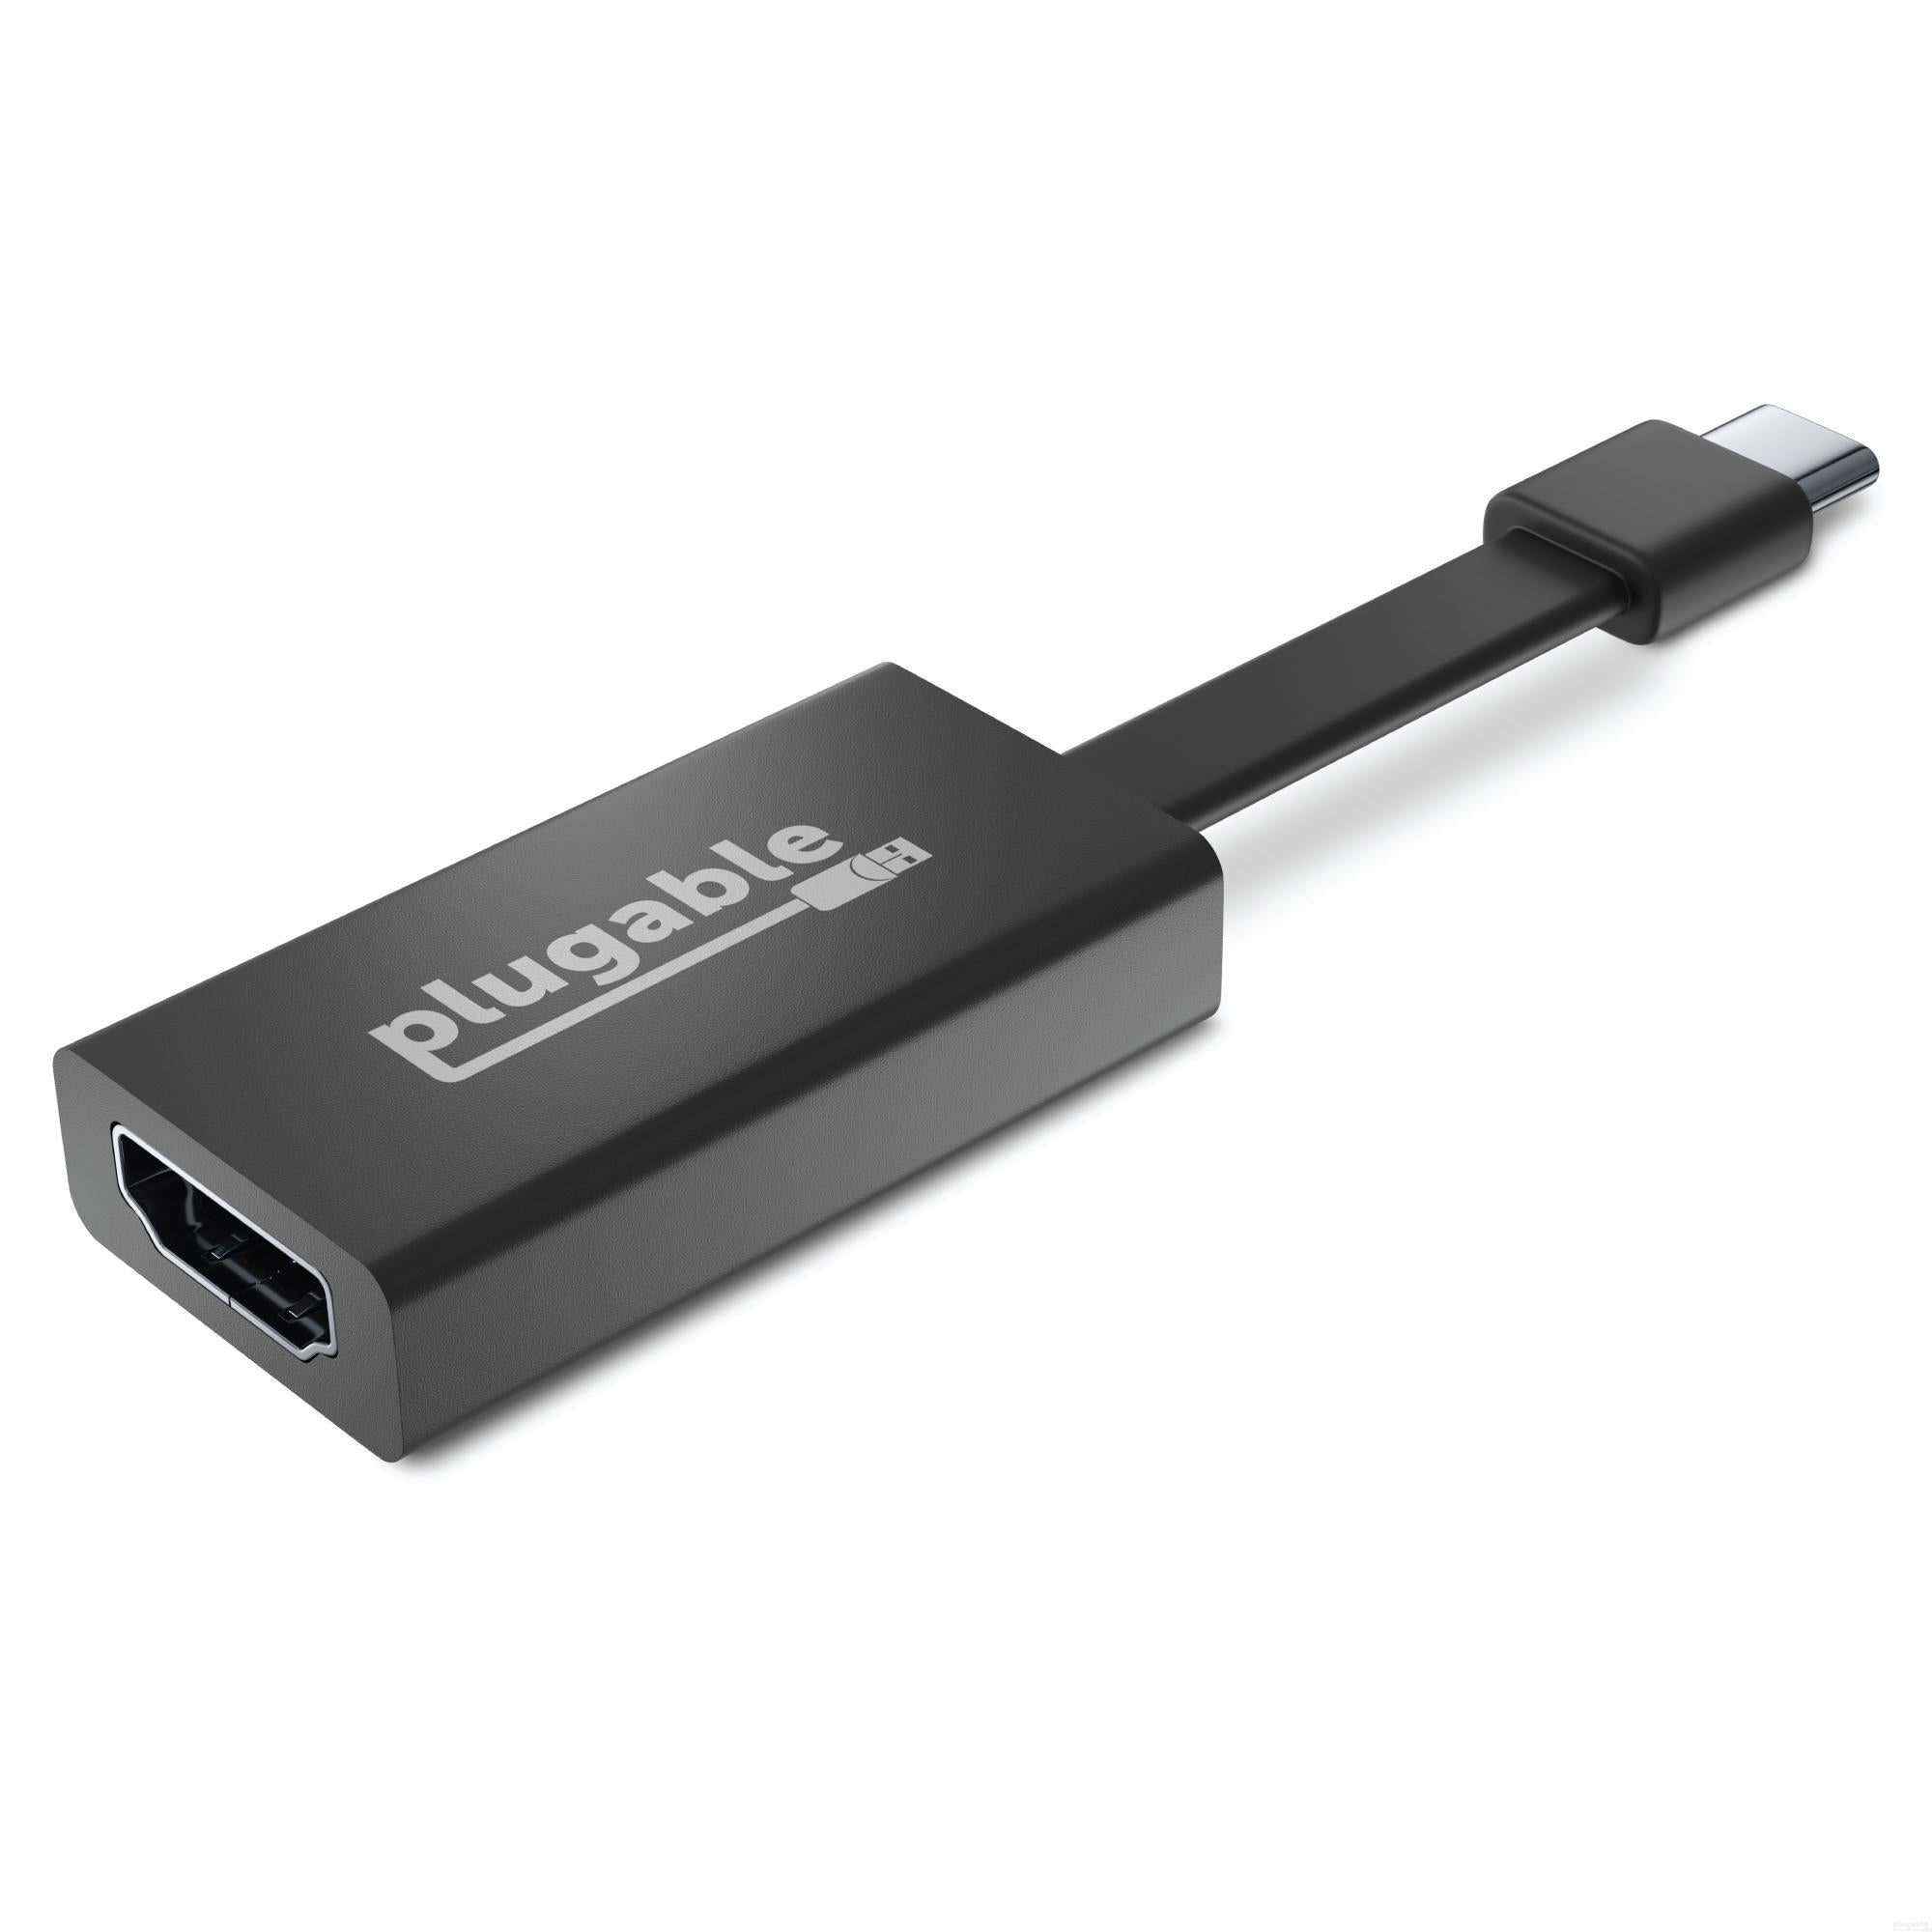 Plugable USB-C to HDMI Adapter – Plugable Technologies